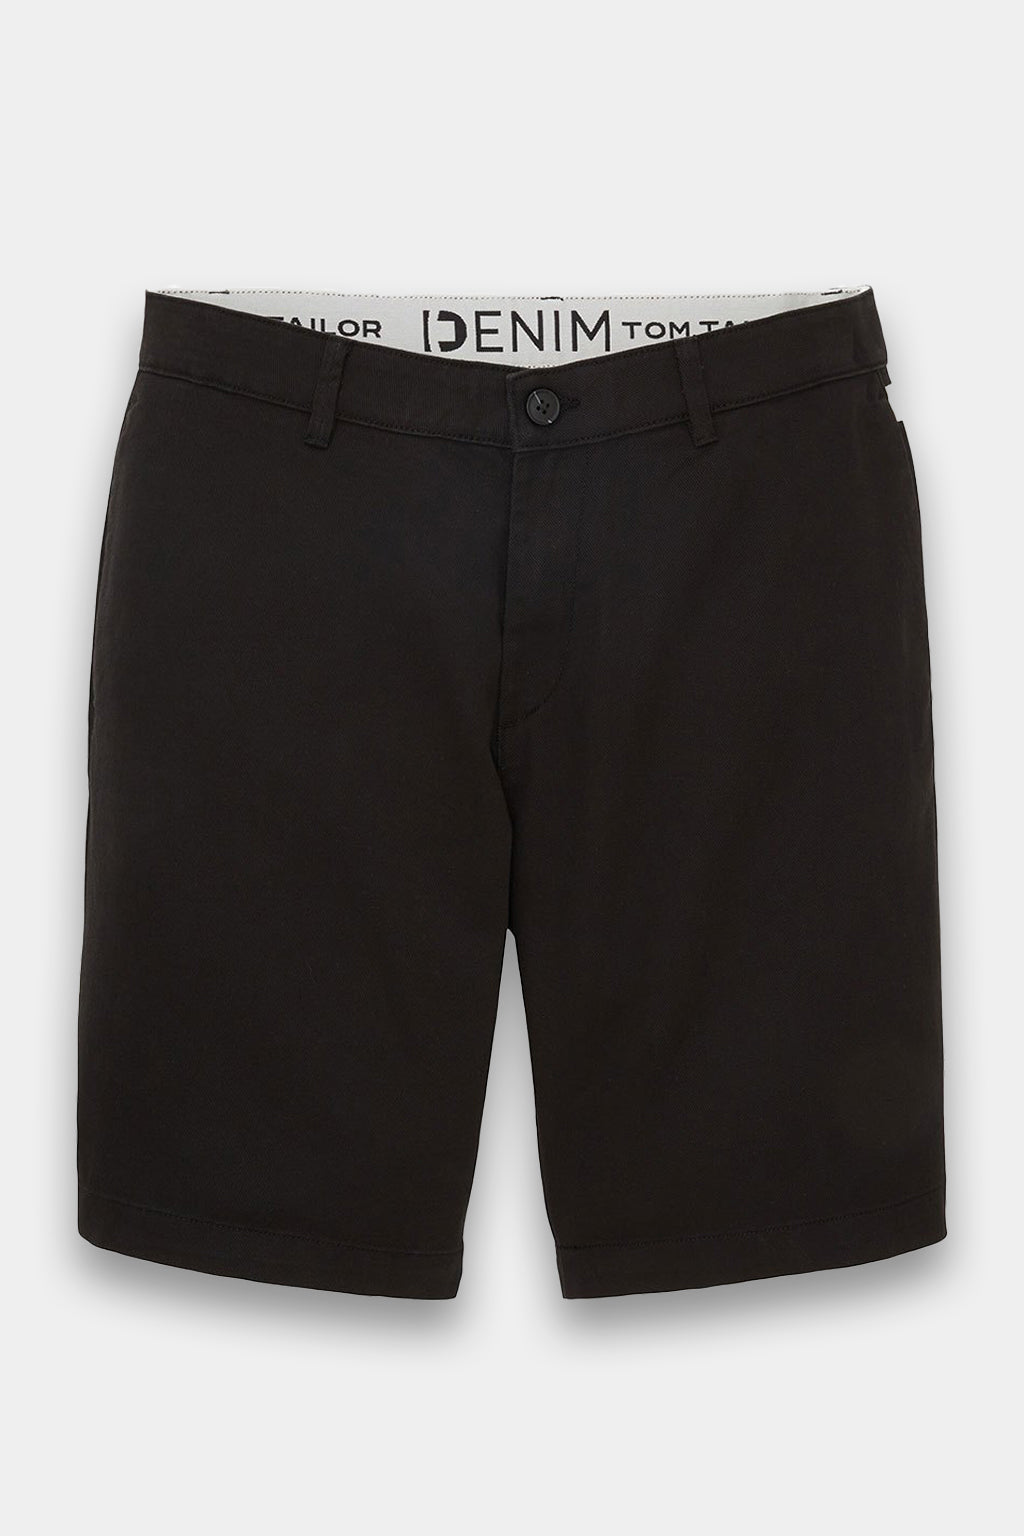 Tom Tailor - Regular Fit Denim Shorts